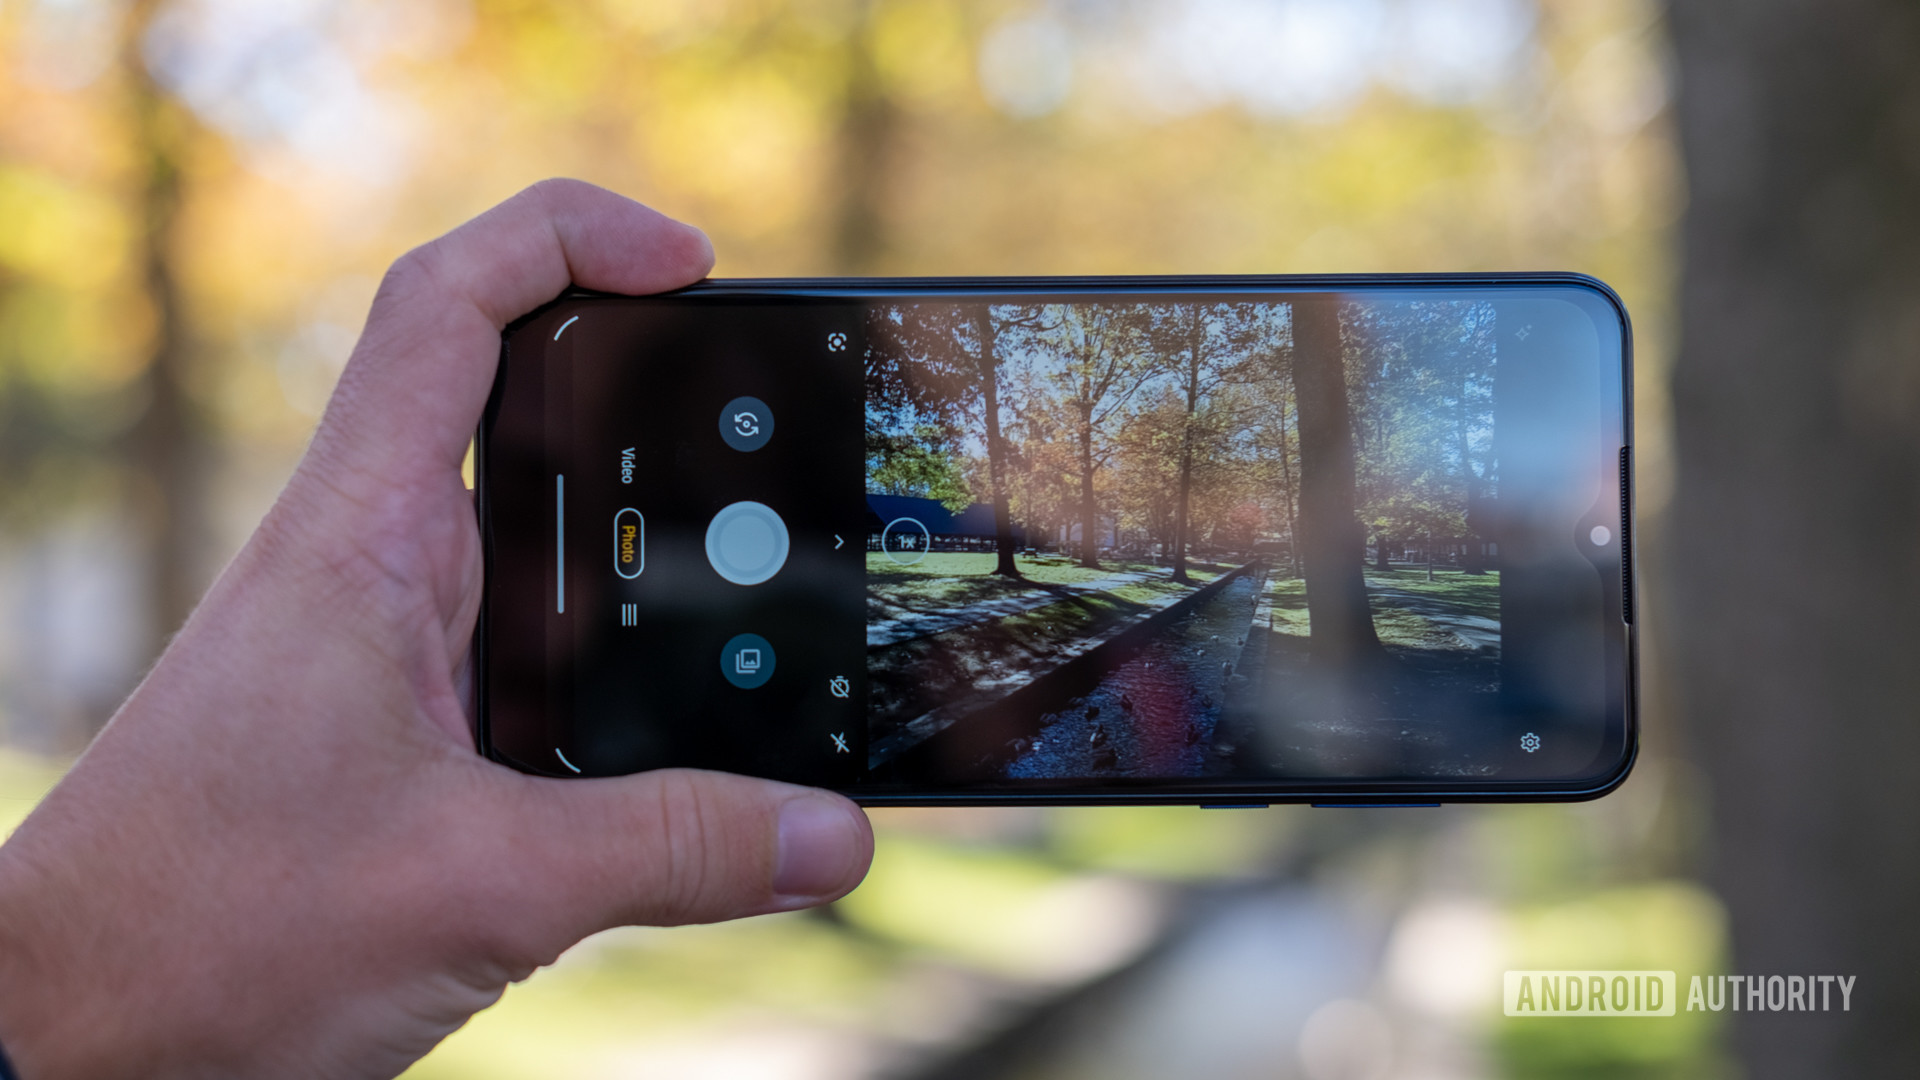 The Moto G Pure camera app